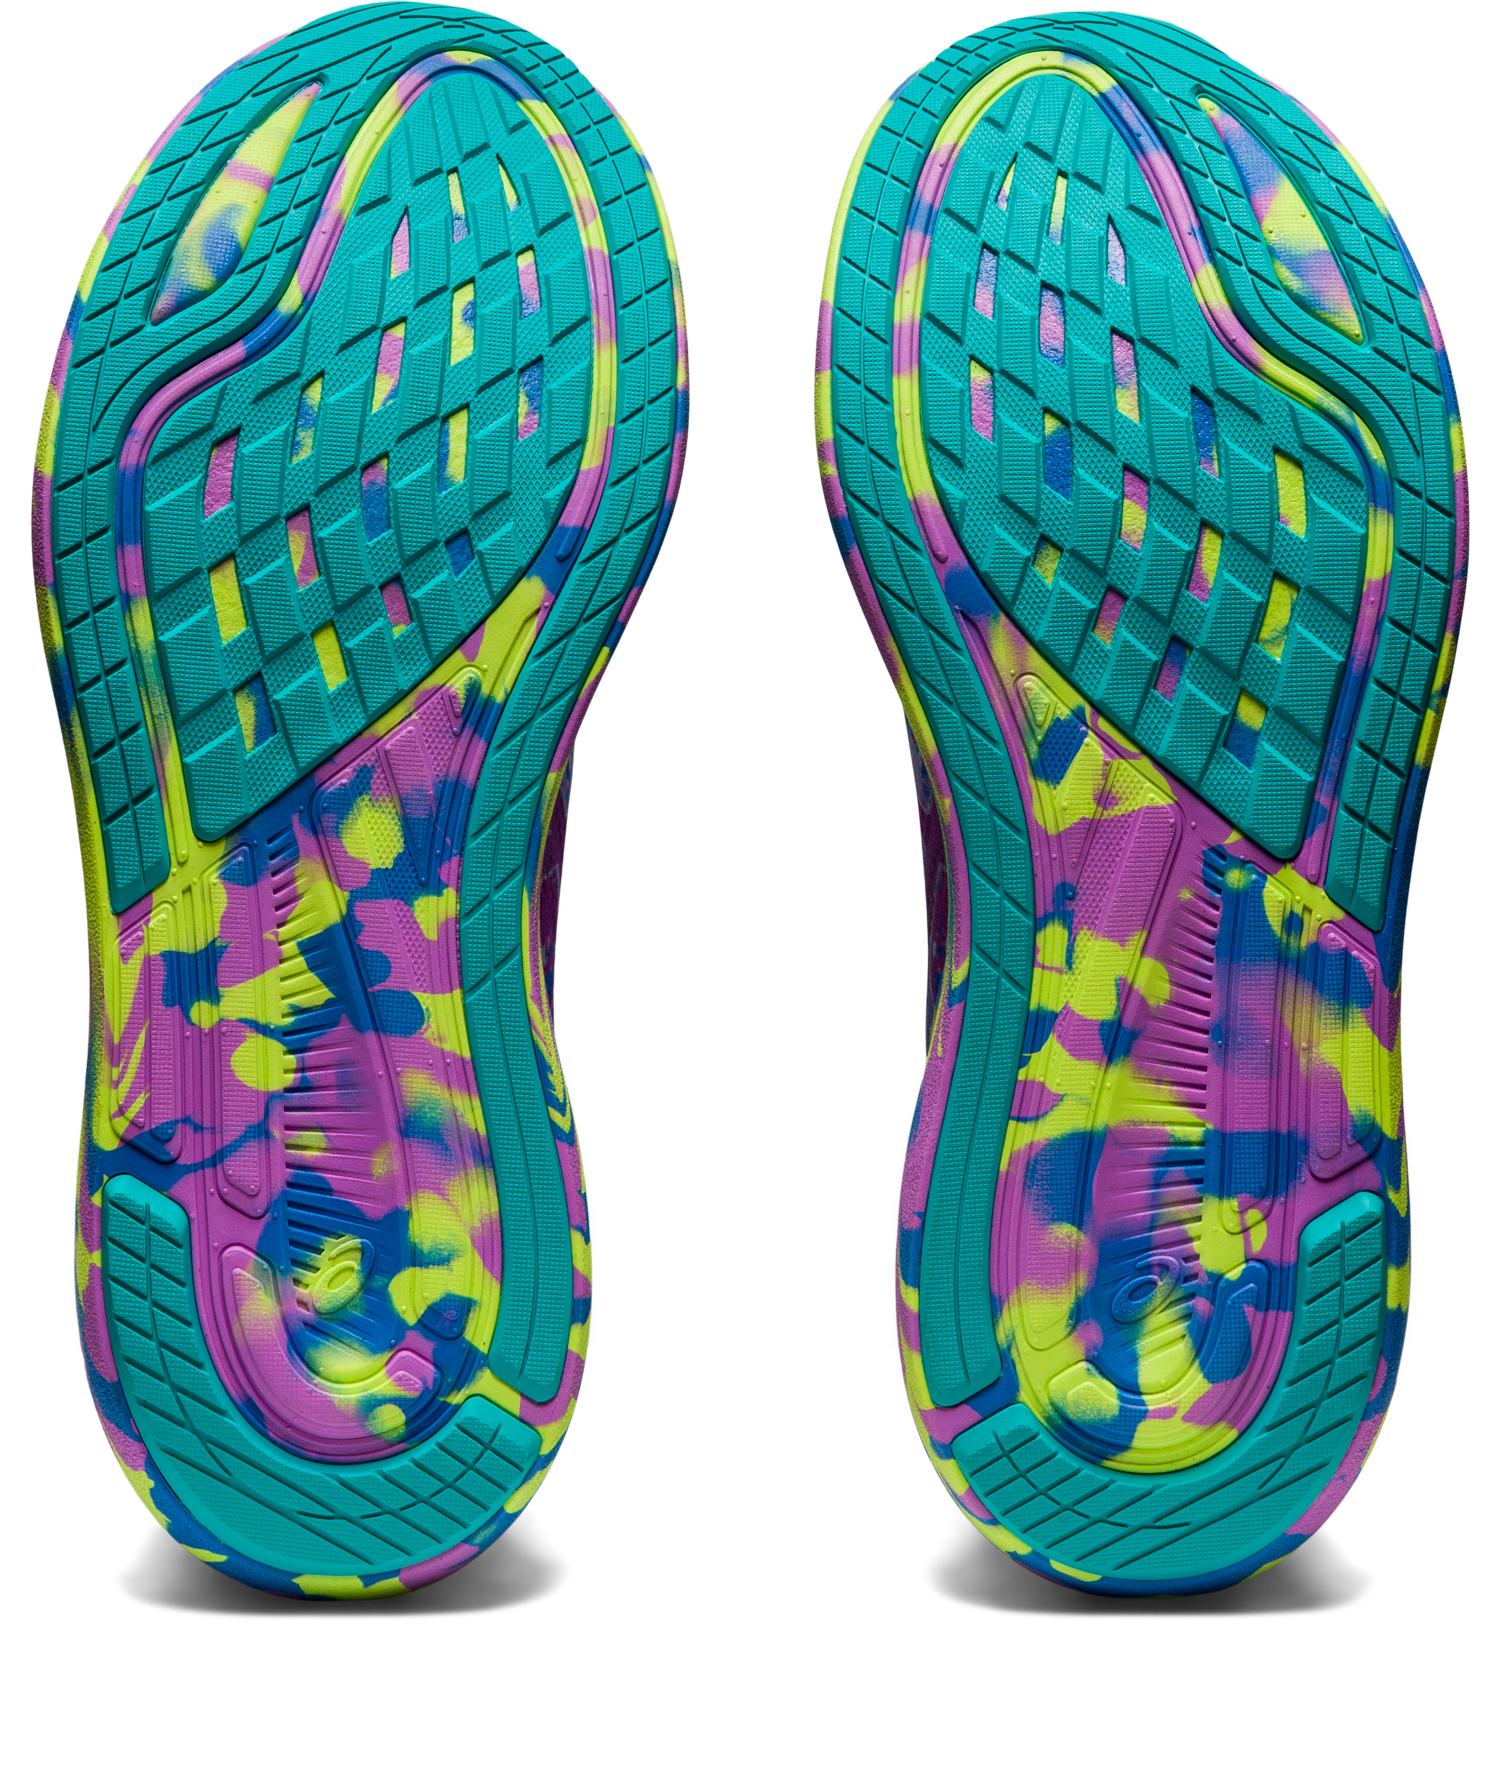 Asics Women's Gel-Noosa Tri 14 Running Shoes in Soft Sky/Sea Glass